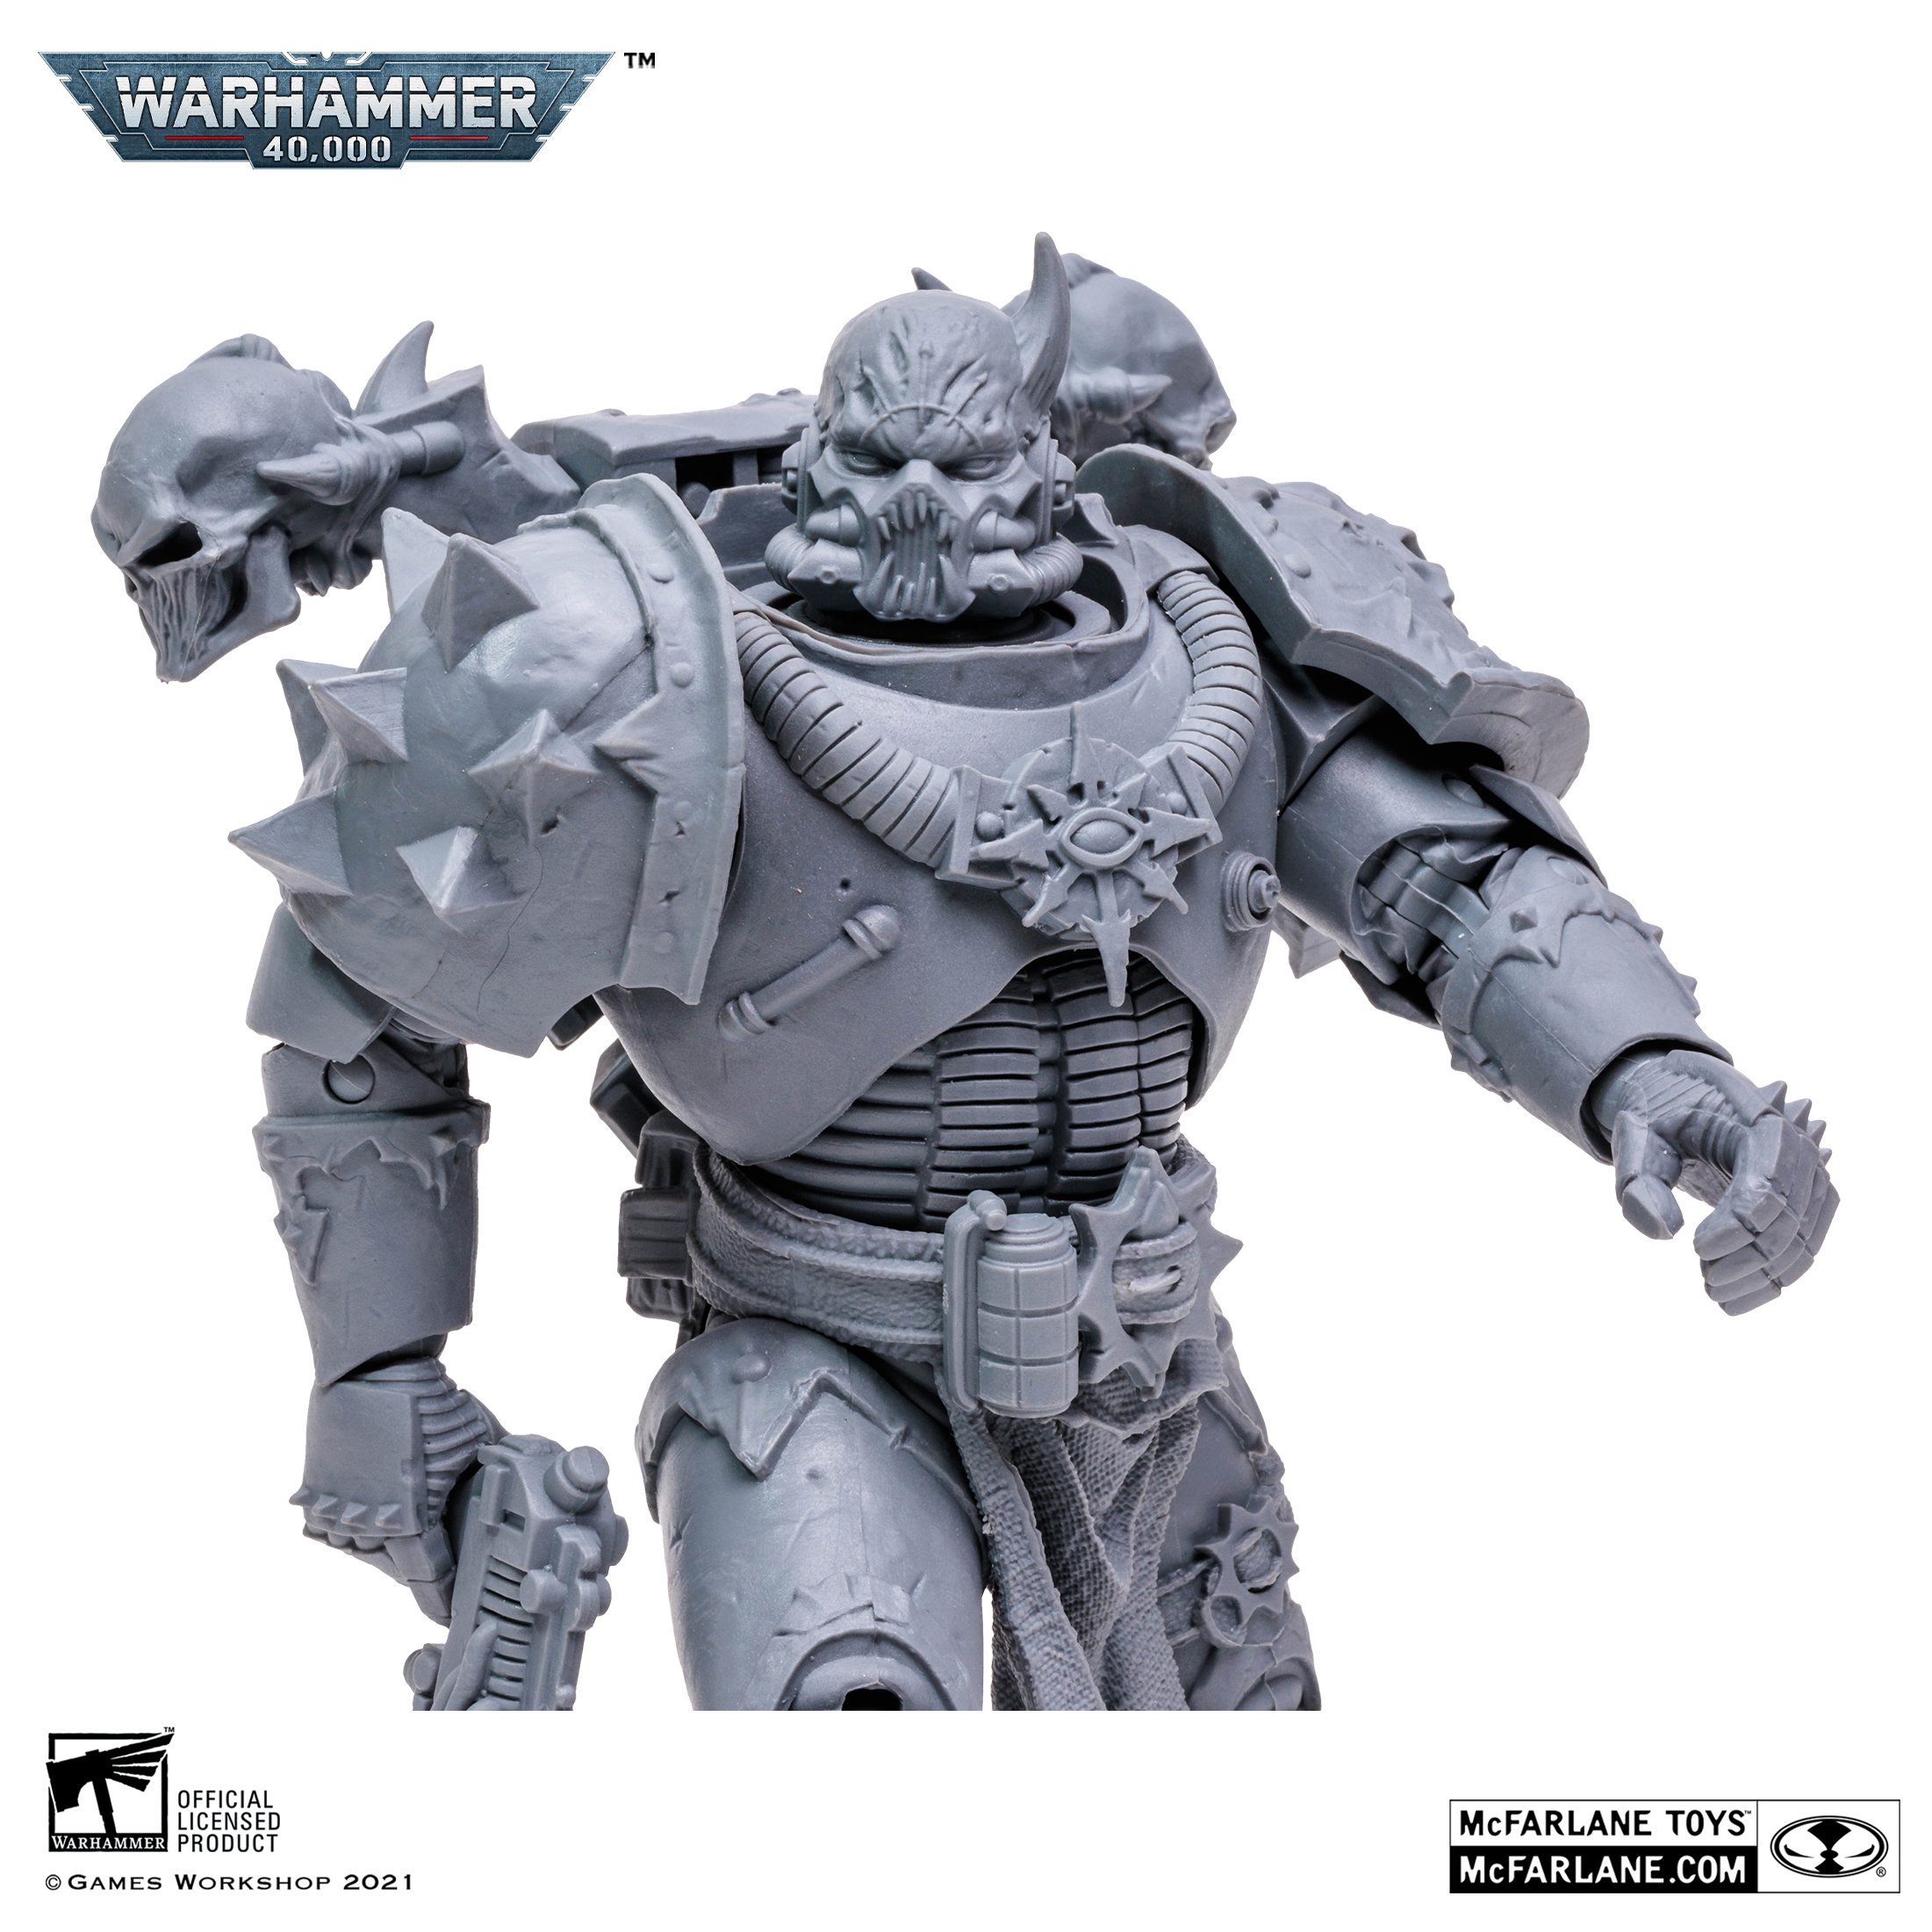 Warhammer 40000 - McFarlane Toys - Chaos Space Marines (Artist Proof)